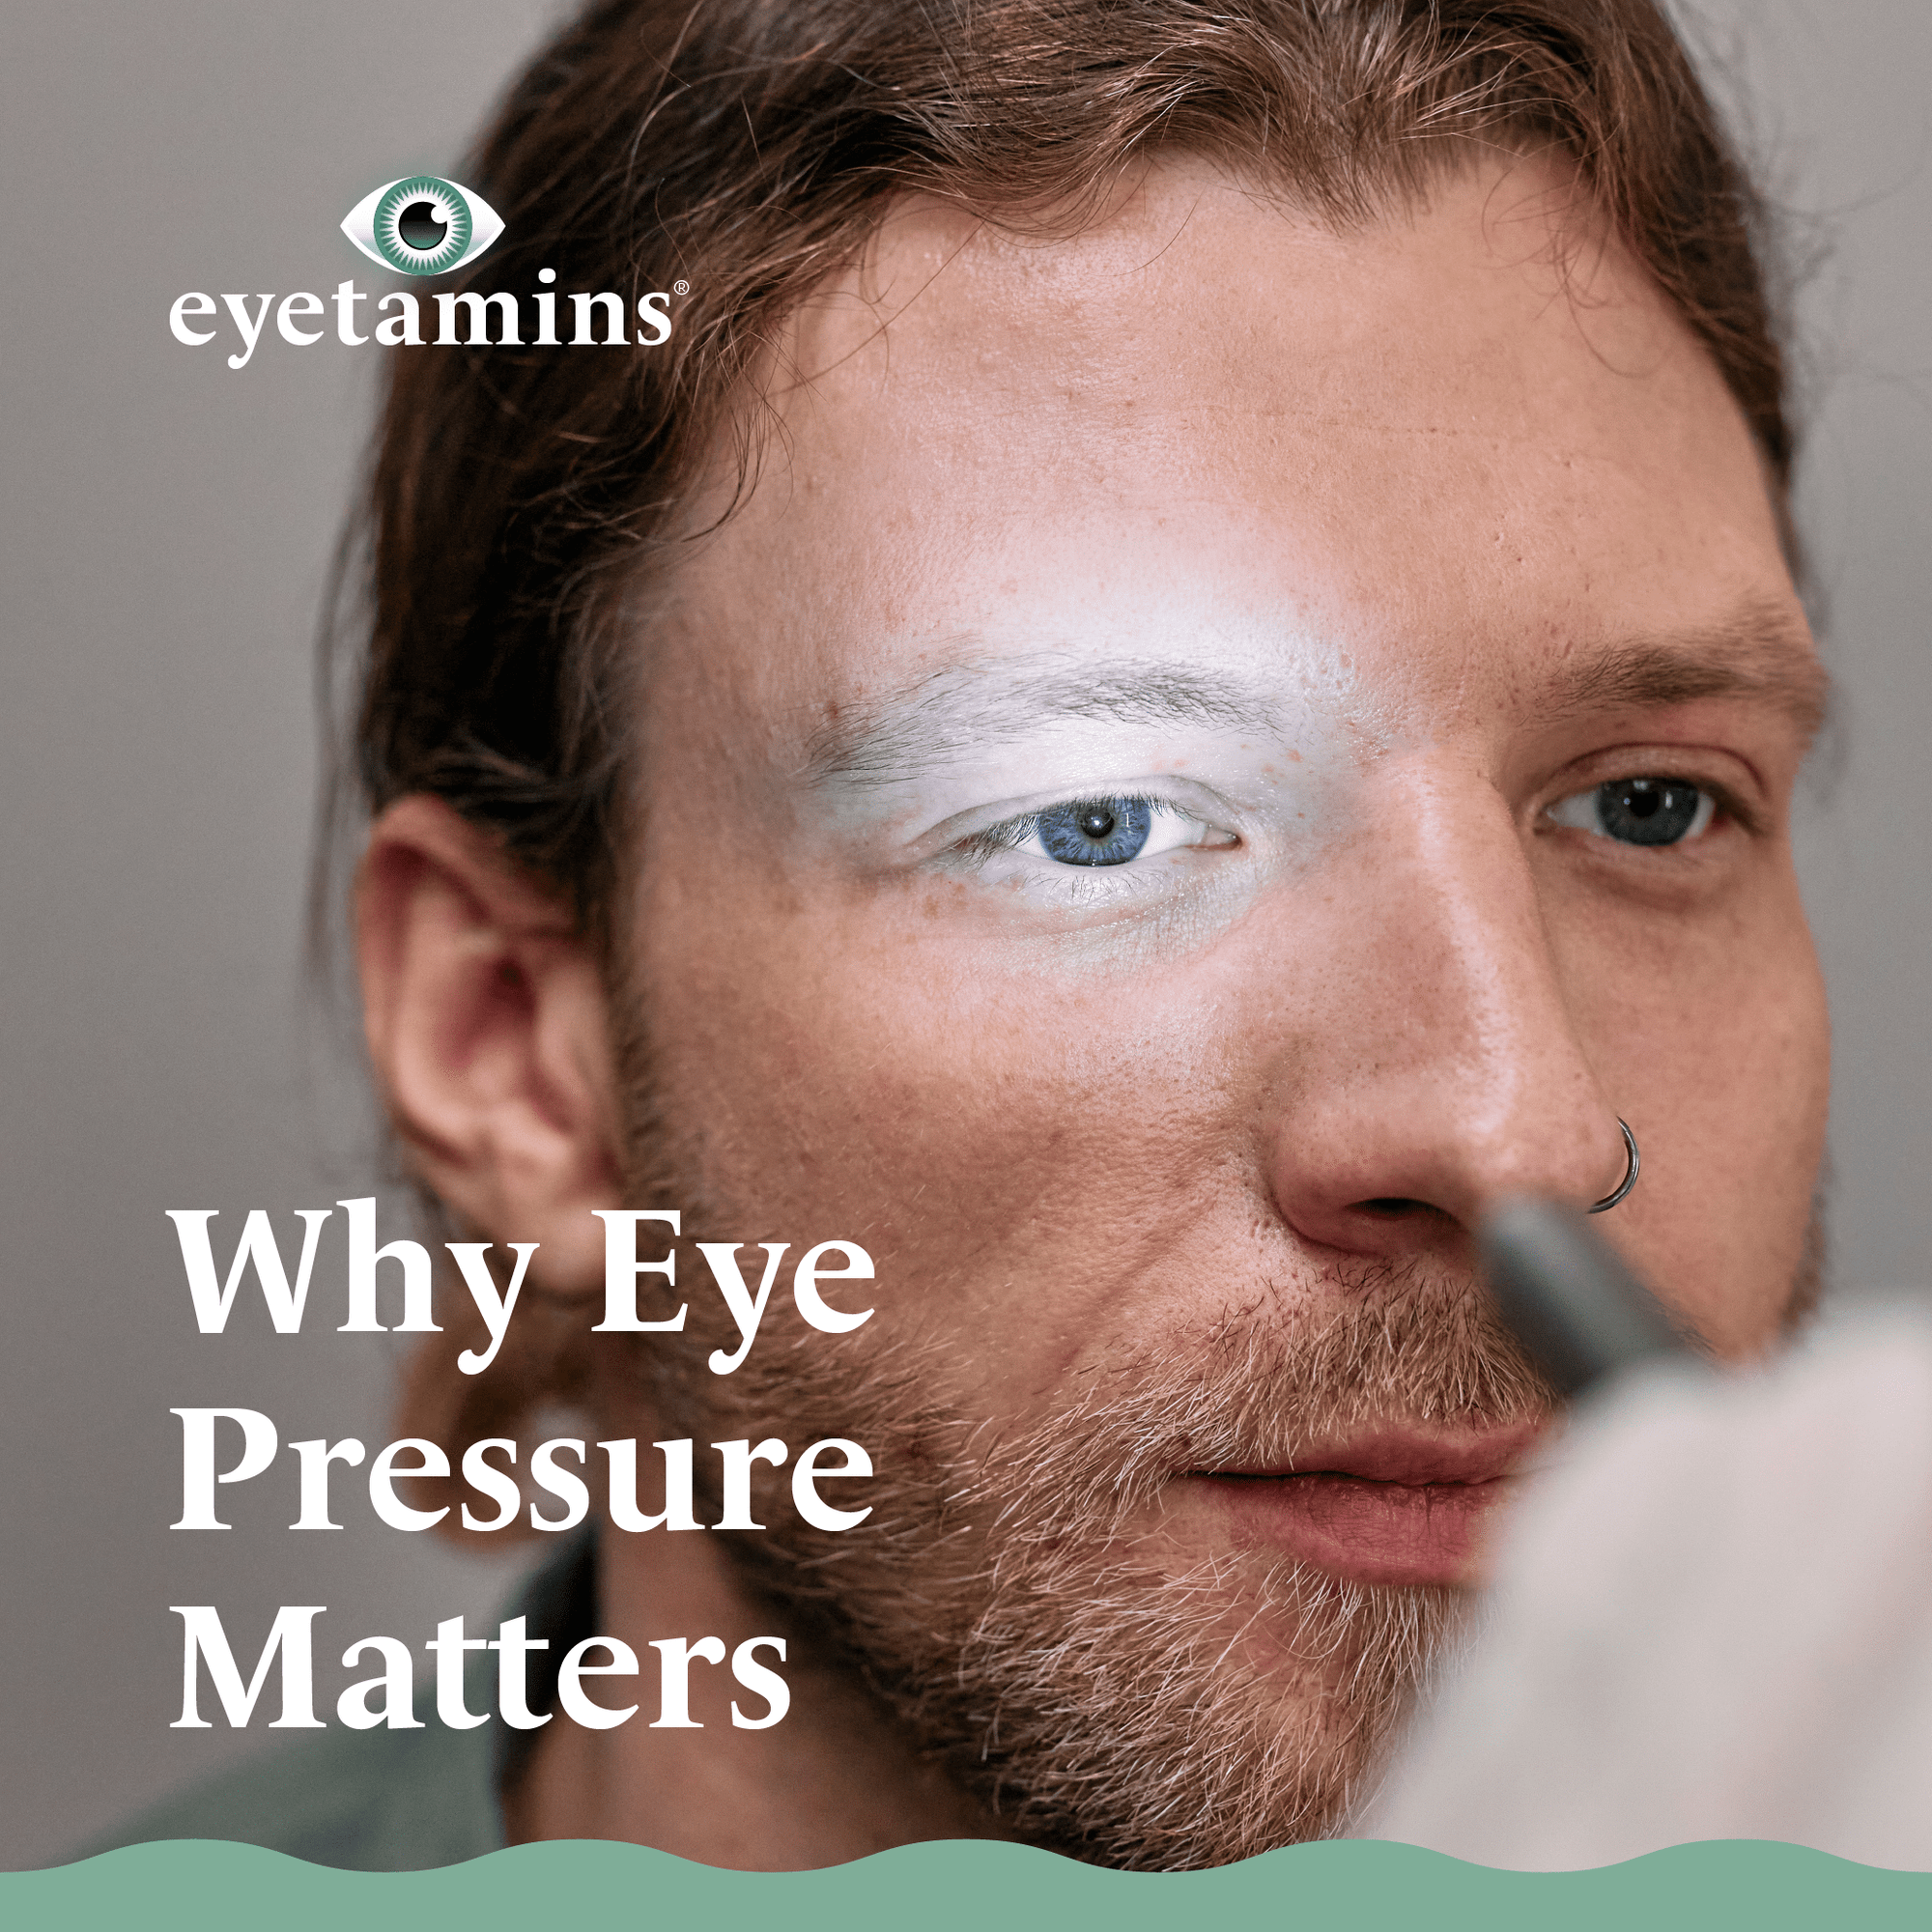 Eyetamins - Why Eye Pressure Matters